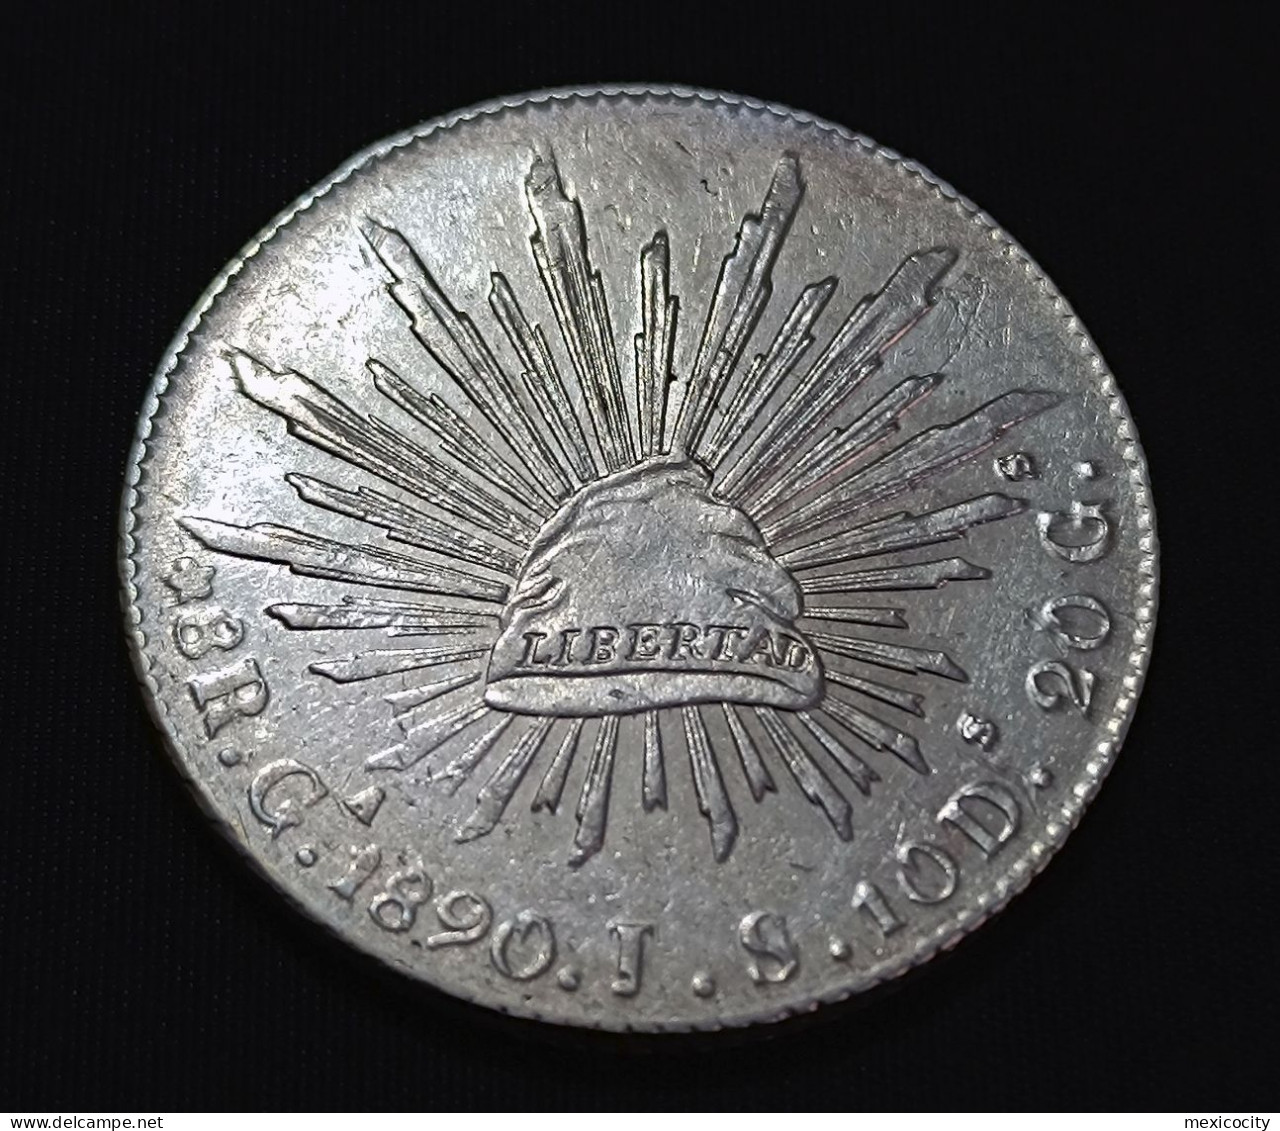 MEXICO 1890 8 REALES Silver Coin, Guadalajara Mint JS - See Imgs., Nice, Scarce - Mexico